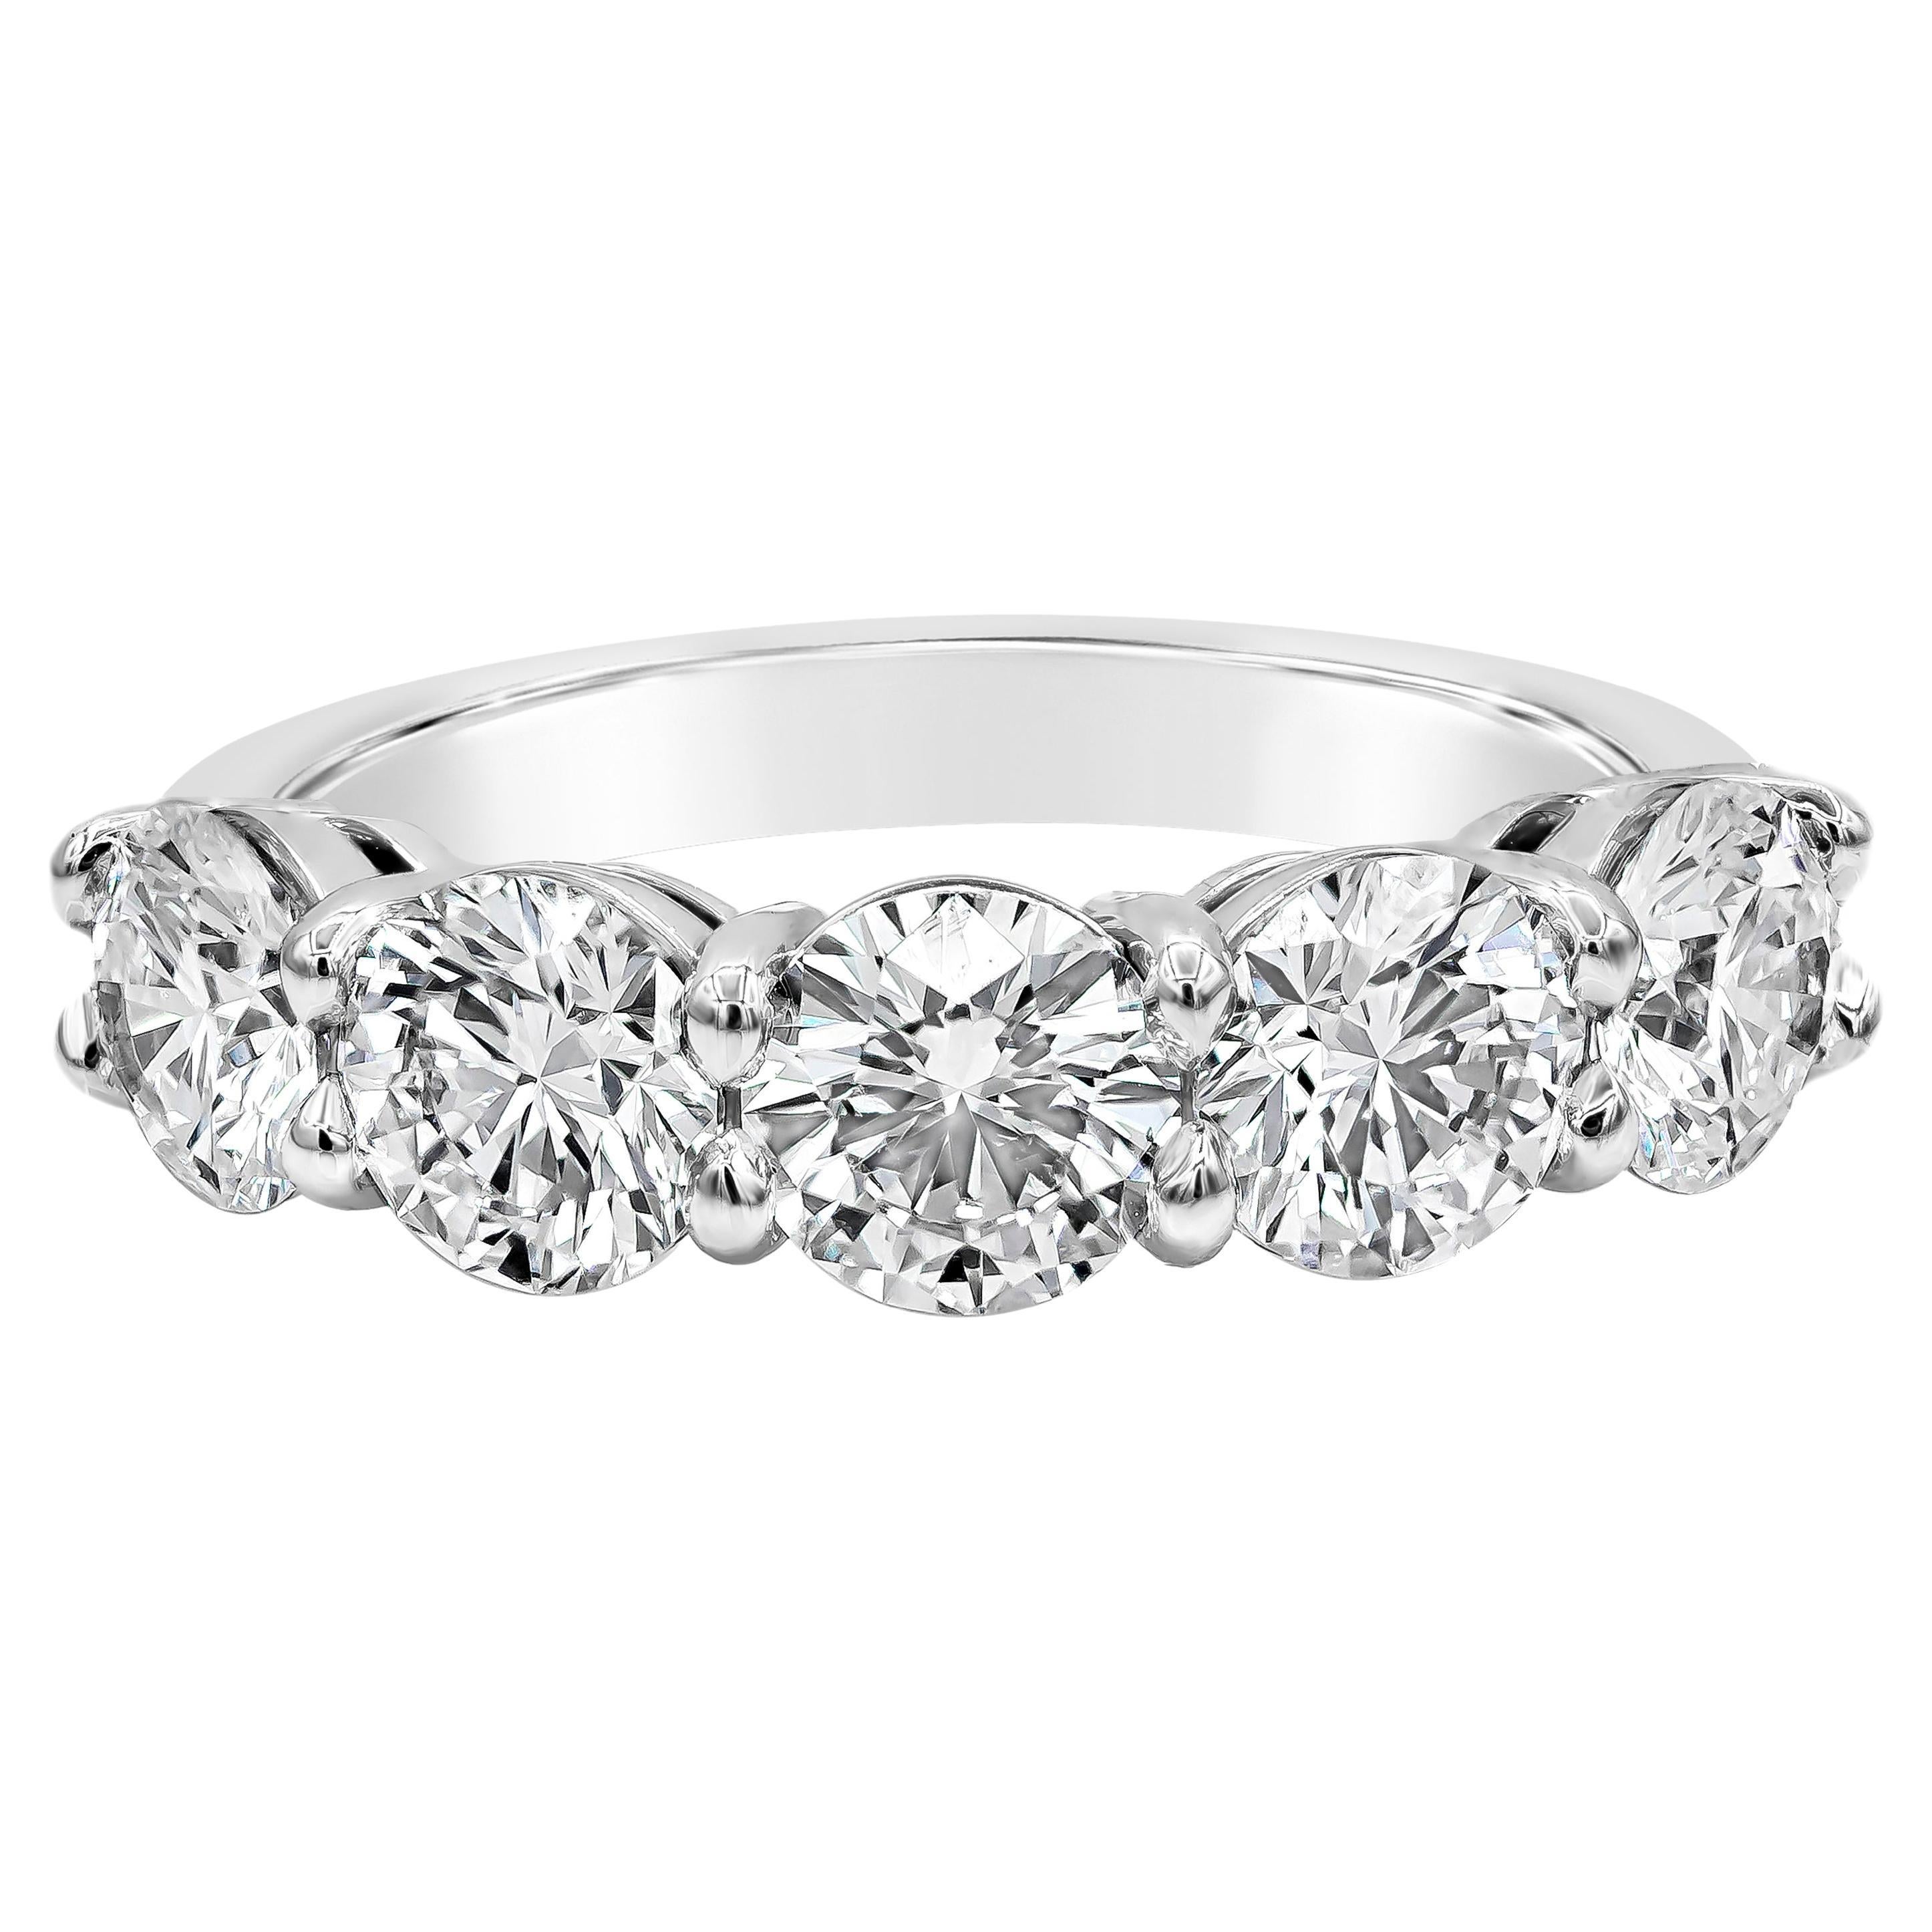 Roman Malakov 5.28 Carat Five Stone Round Cut Diamond Wedding Band Ring